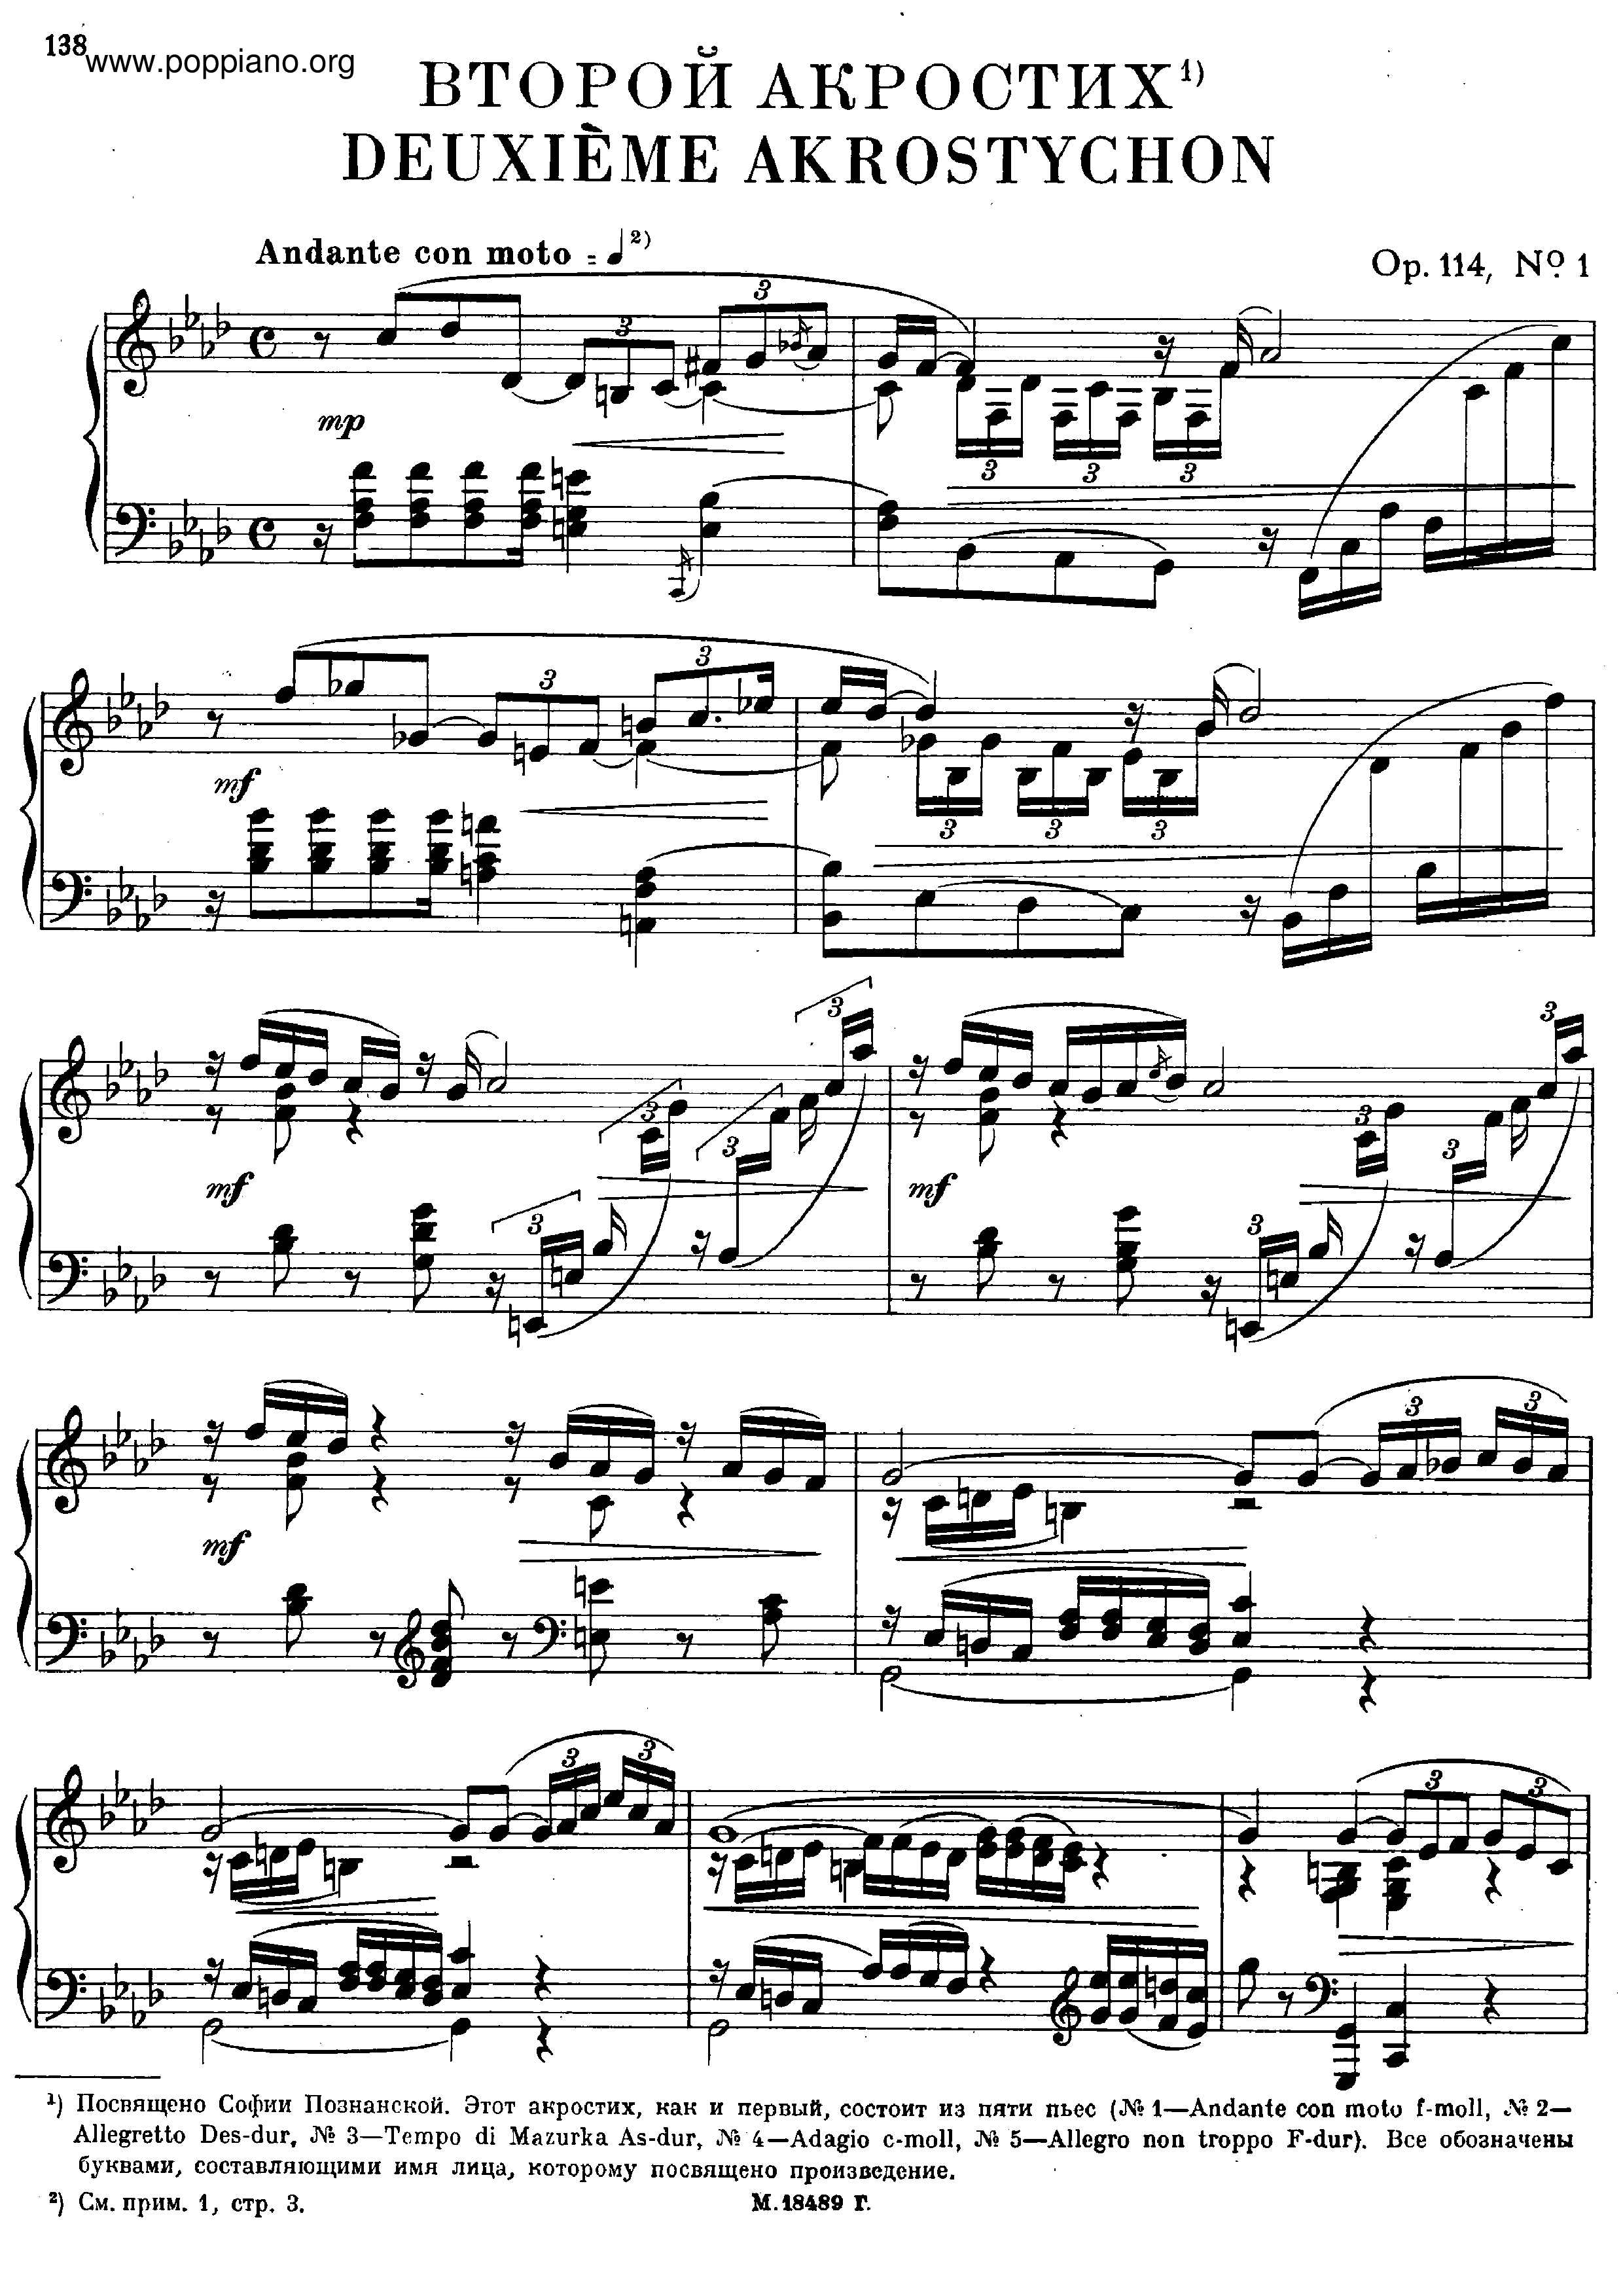 Acrostychon No.2, Op.114琴谱